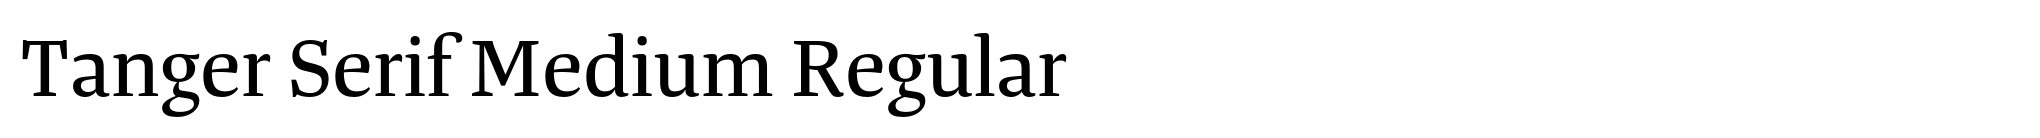 Tanger Serif Medium Regular image